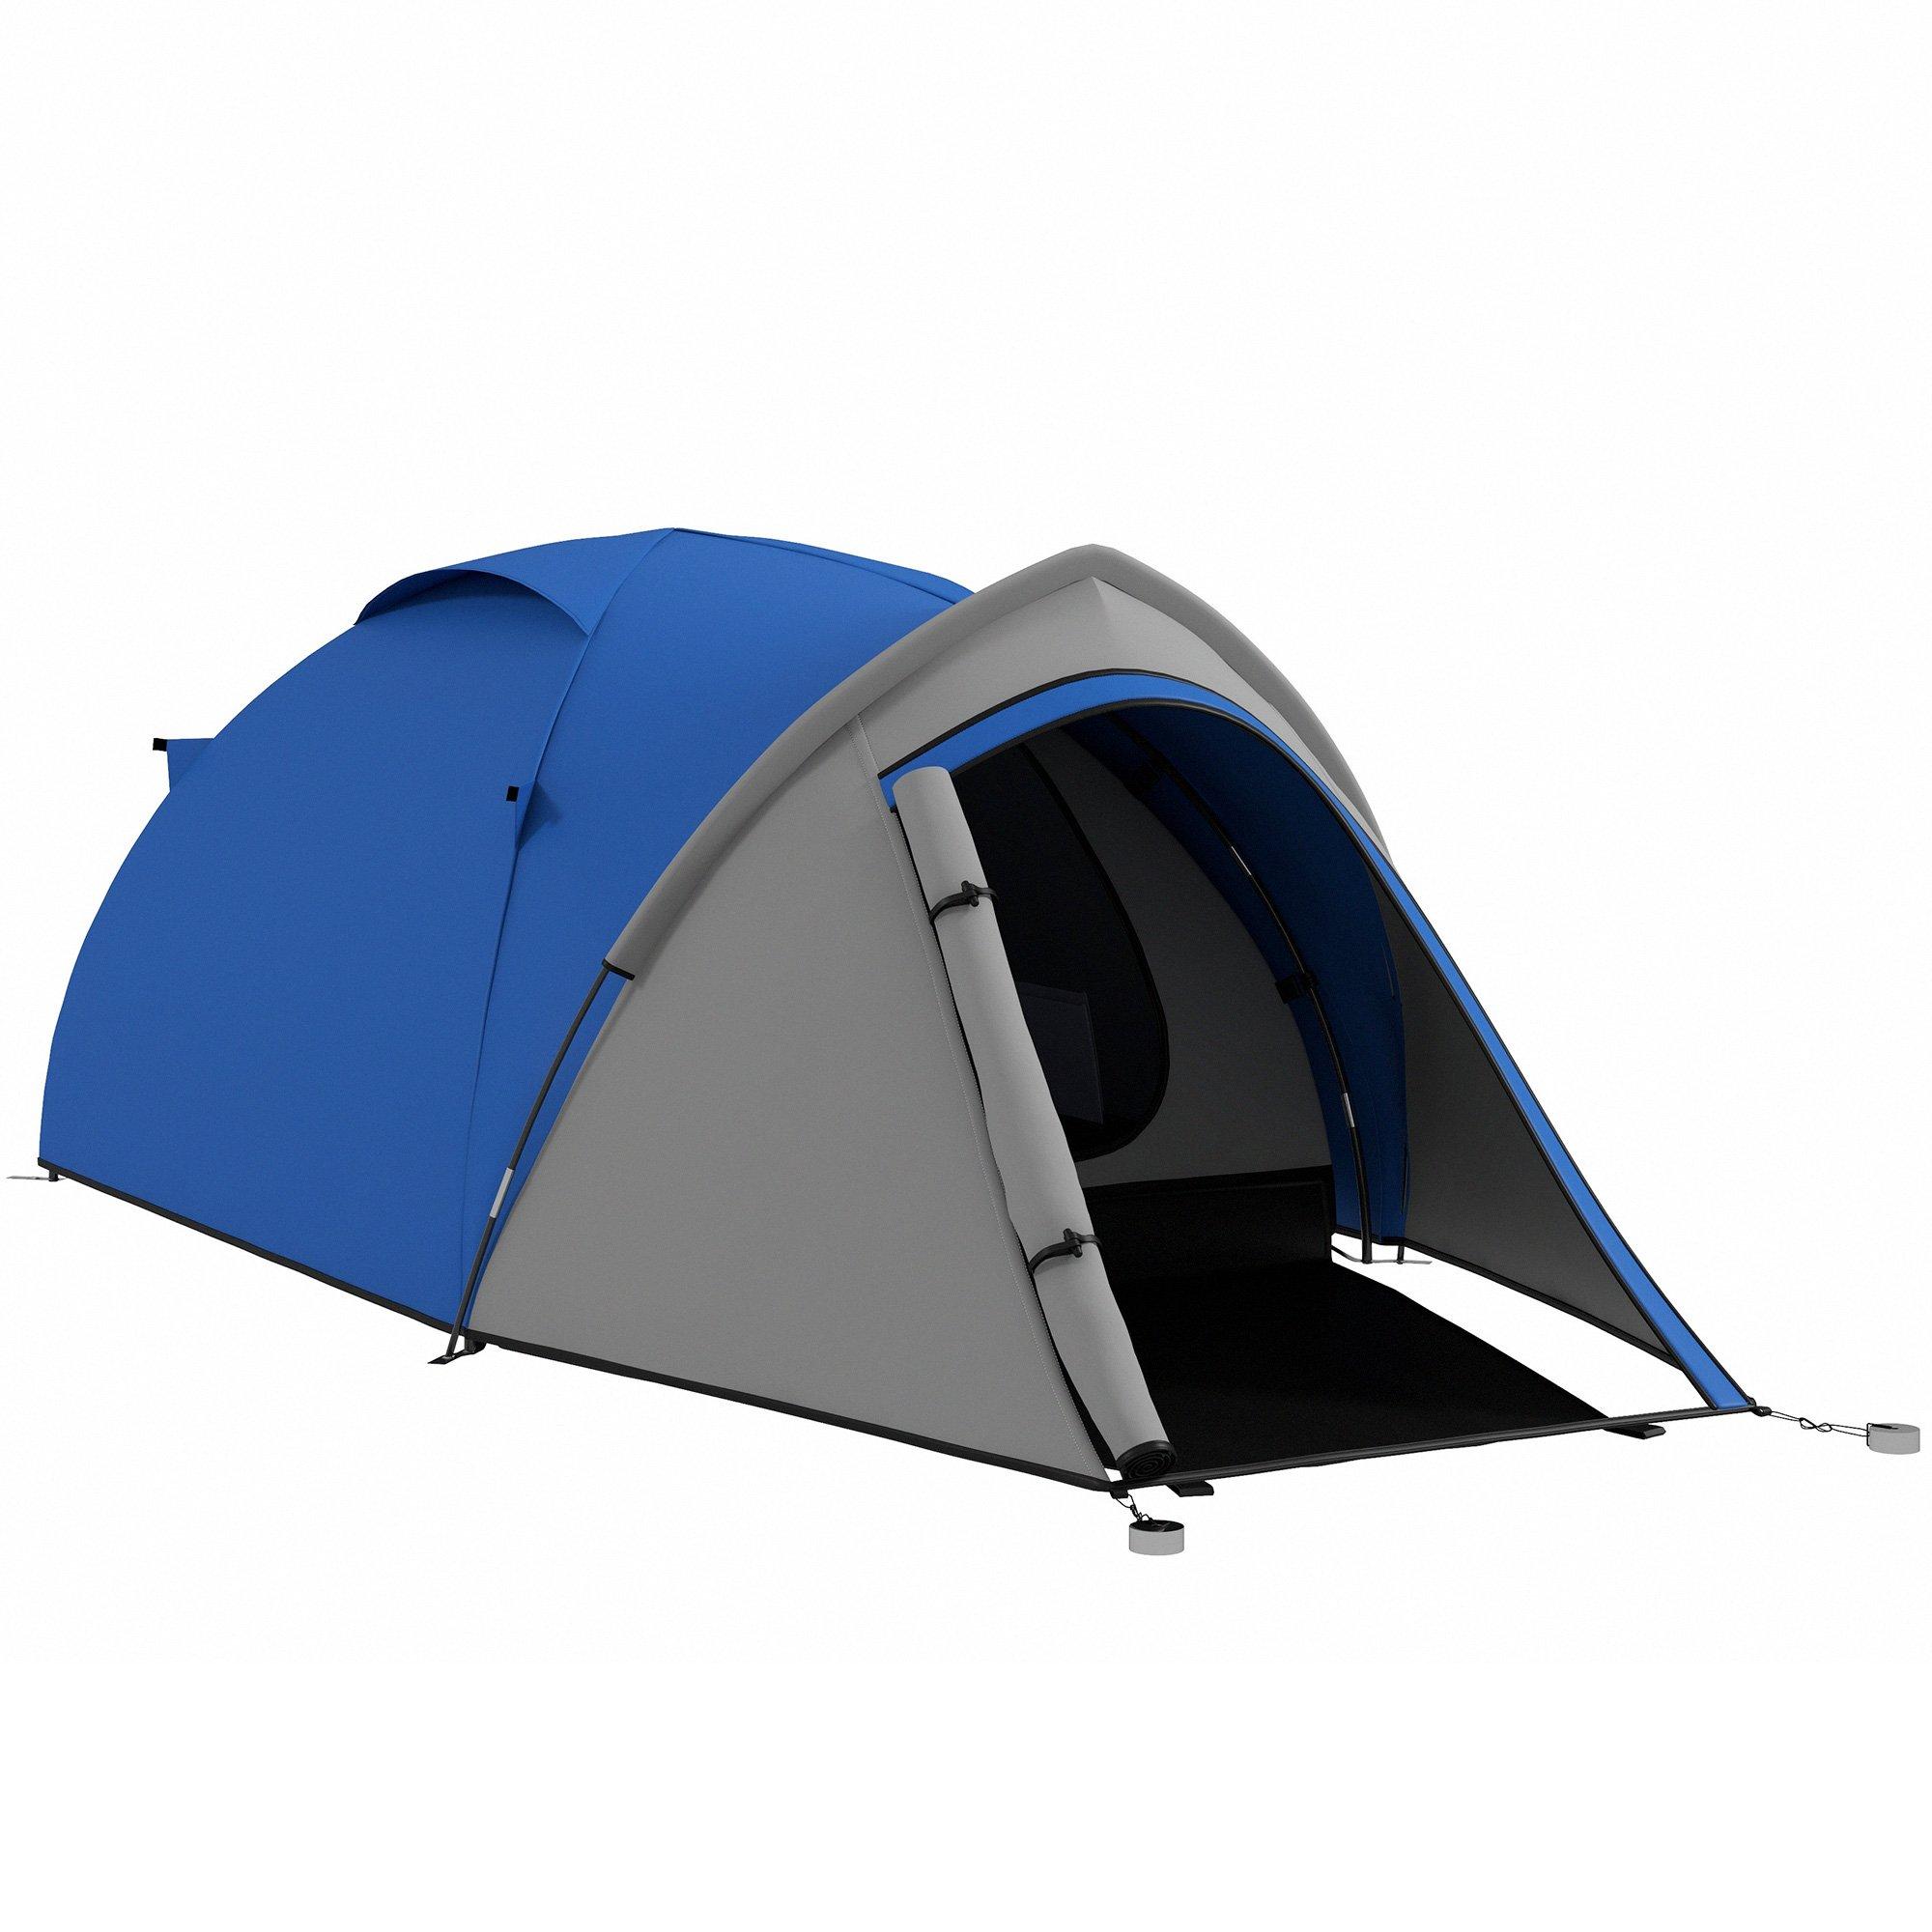 Two-Man Camping Tent w/ Weatherproof Shell Large Windows